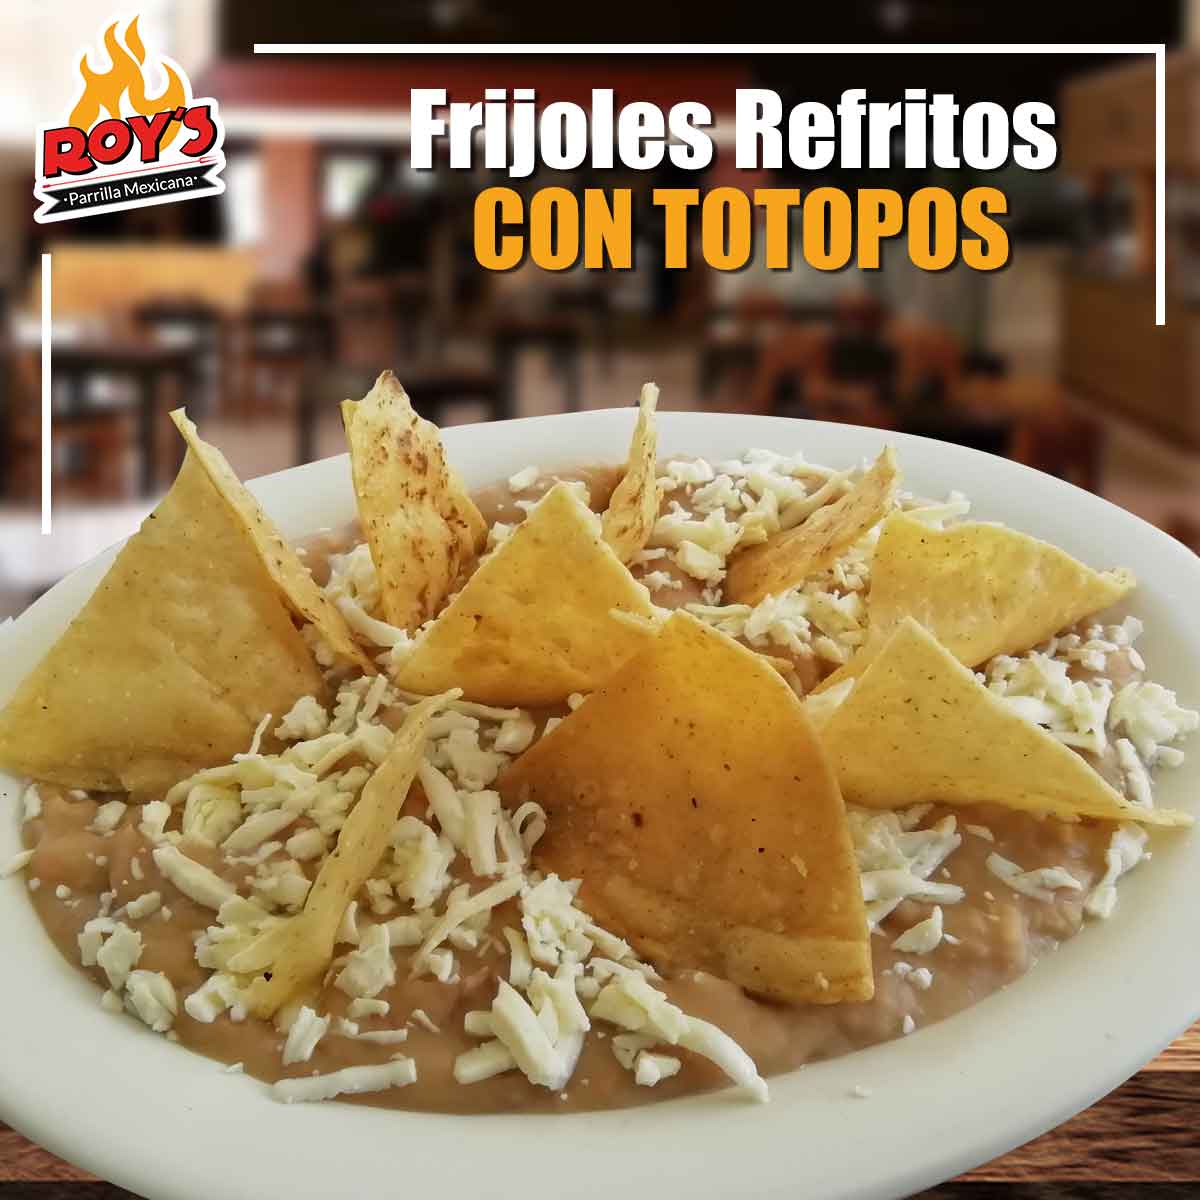 Frijoles Refritos con Totopos